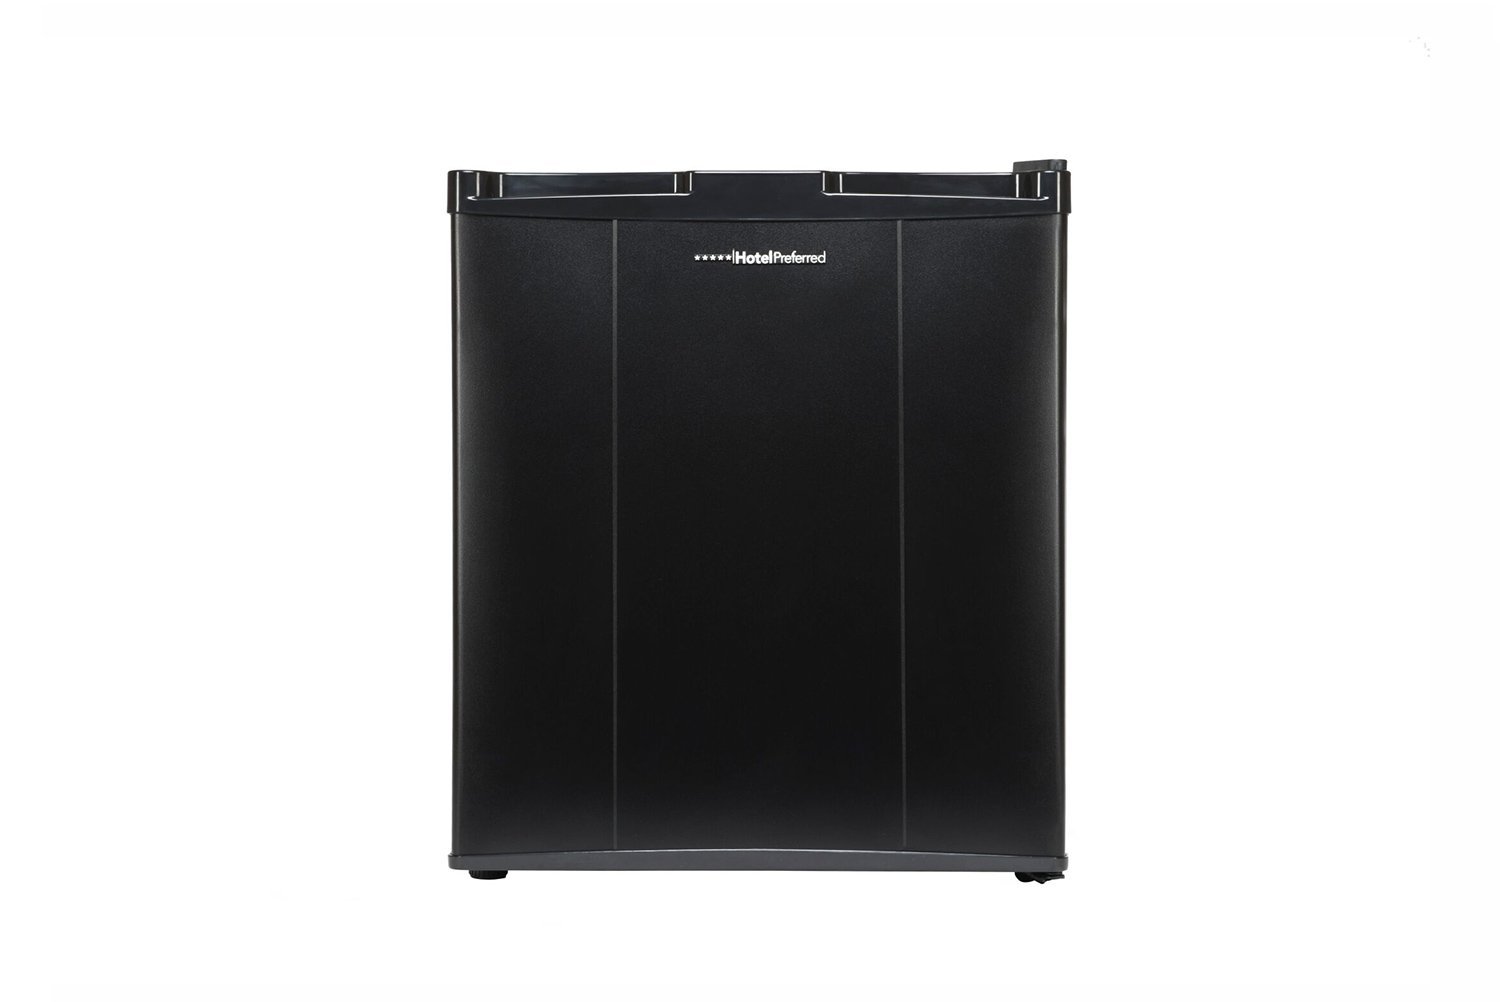 Electronics & Appliances - Hotel Fridge HPRF17 1.7 Cubic Foot Compact Refrigerator